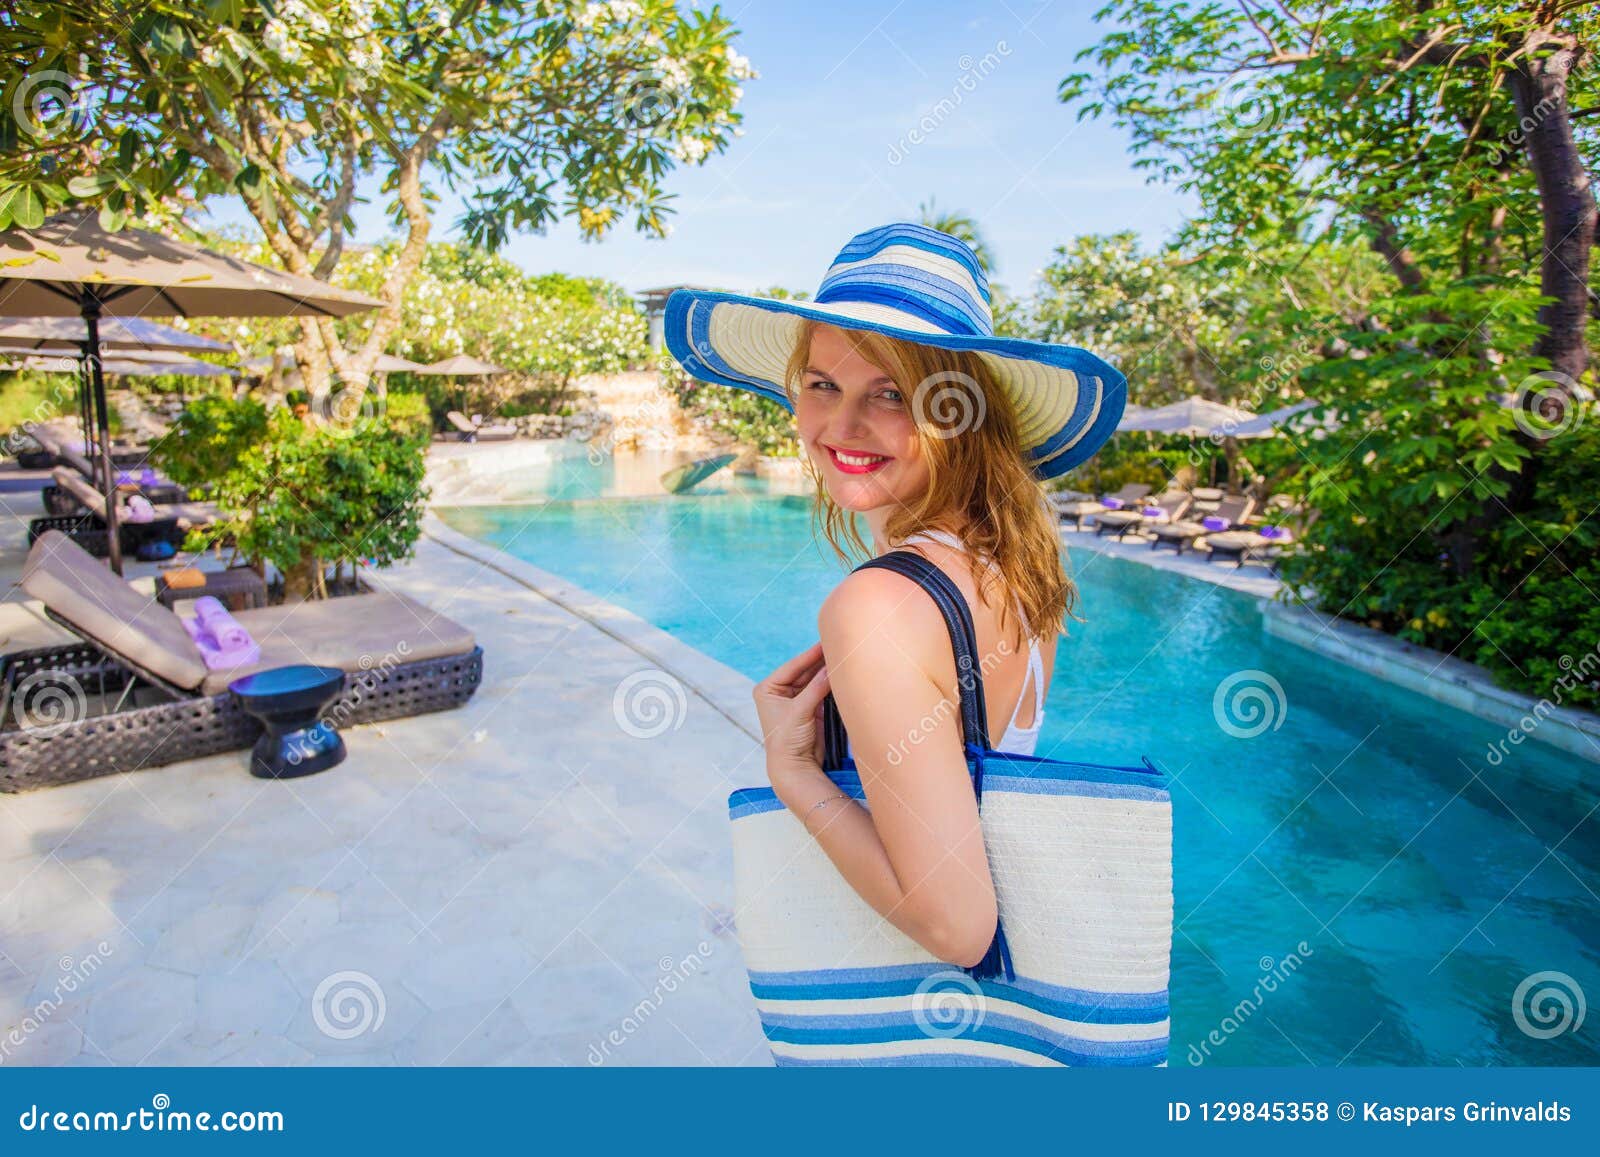 woman enjoying vacation in tropical getaway